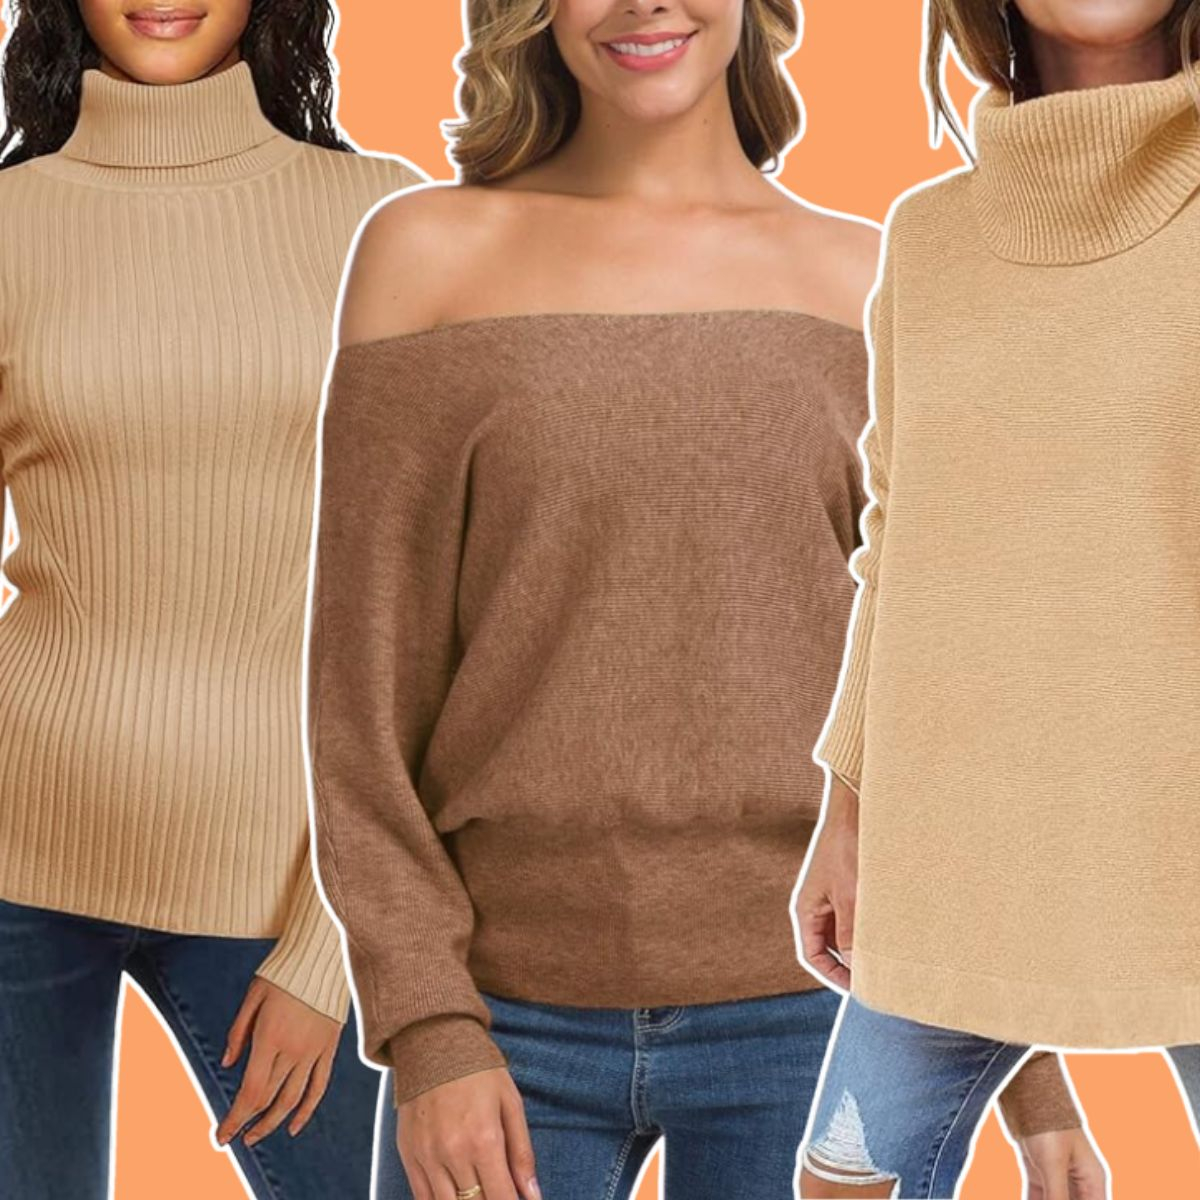 The 21 best women's sweaters for cozy comfort